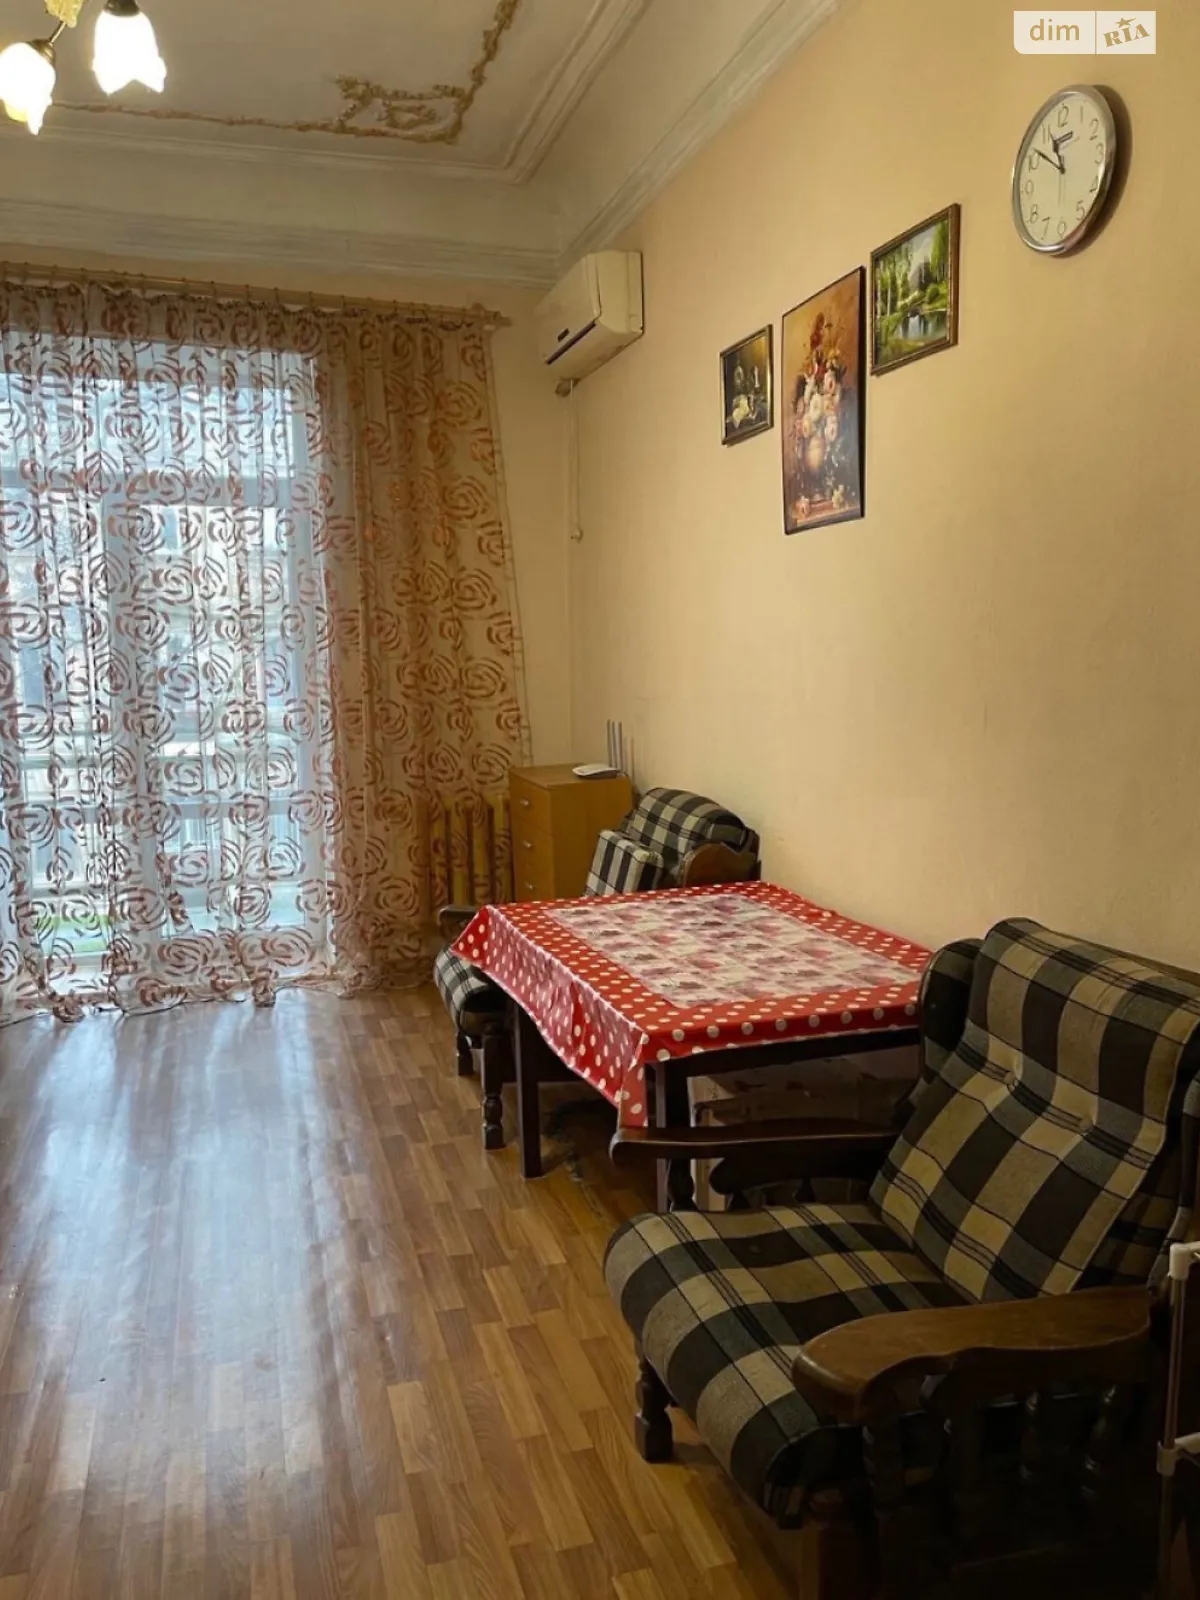 Продается комната 21 кв. м в Одессе, цена: 13000 $ - фото 1